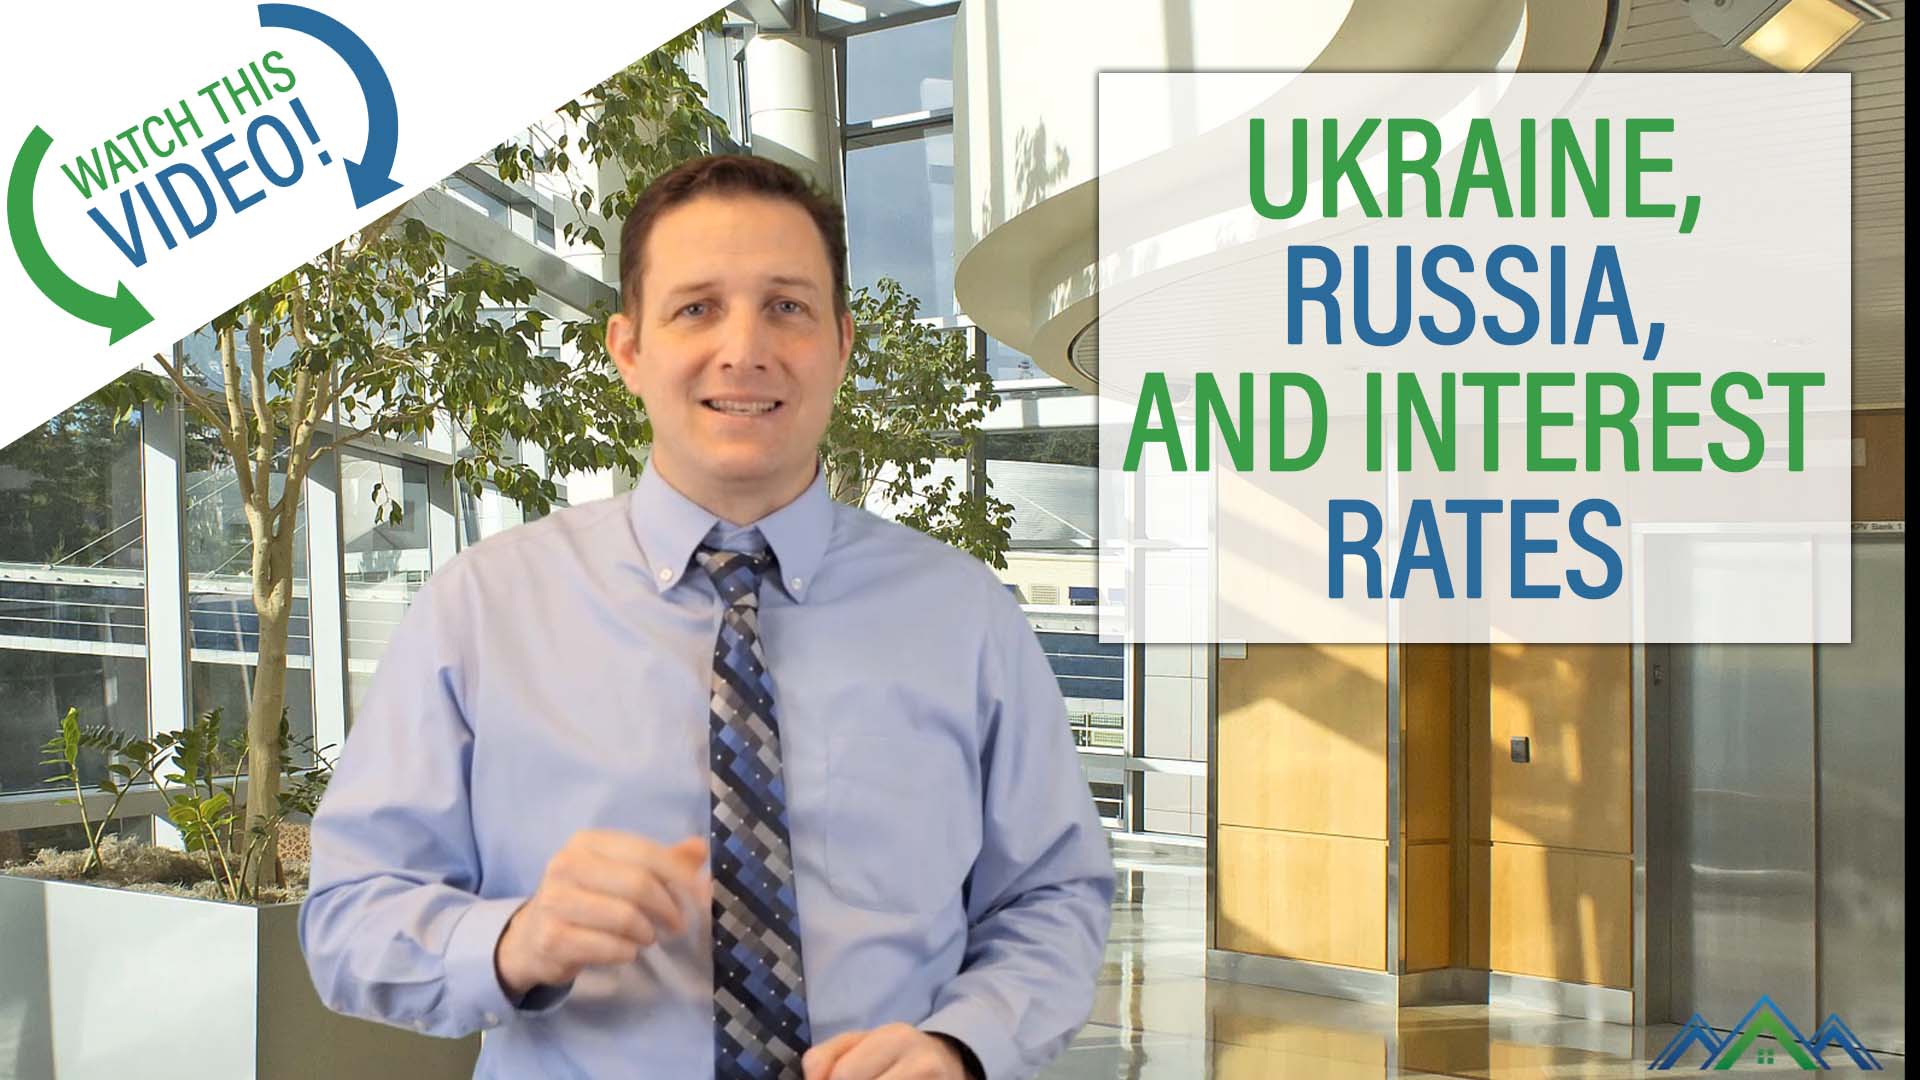 Ukraine, Russia, and Interest Rates